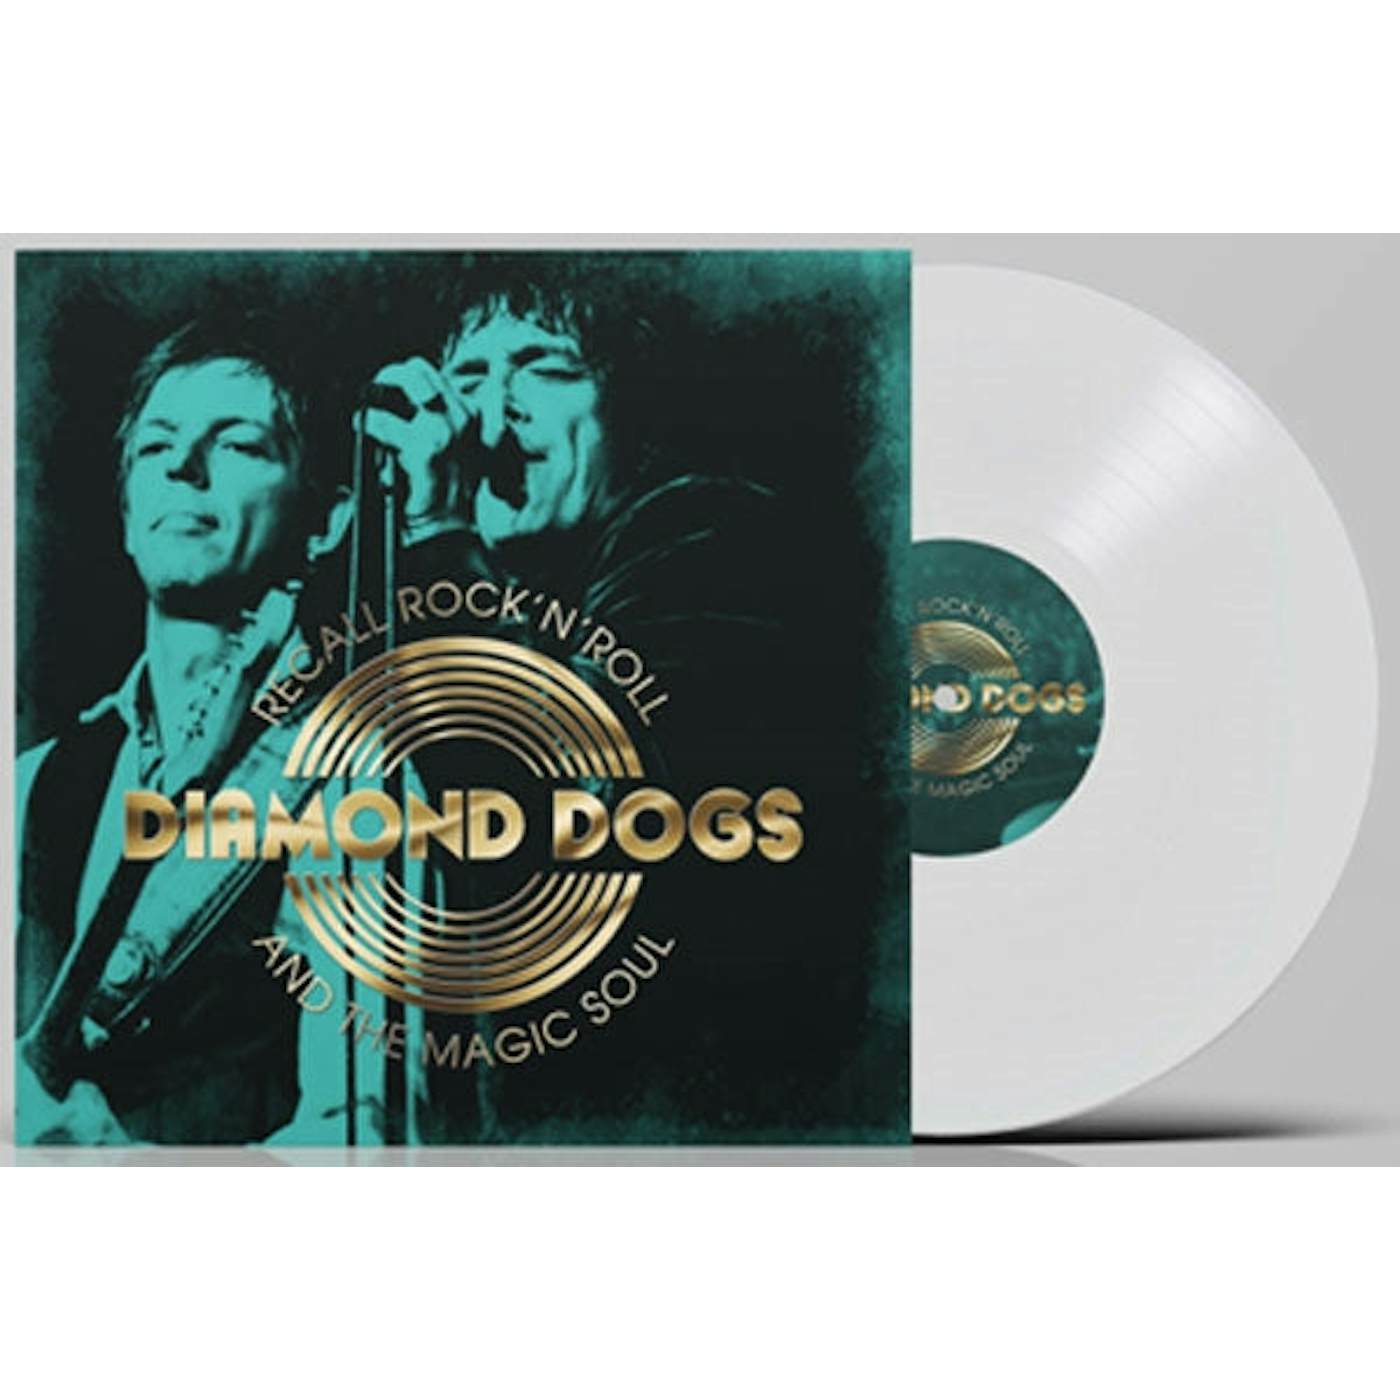 Diamond Dogs LP - Recall Rock 'N' Roll And The Magic Soul (White Vinyl)